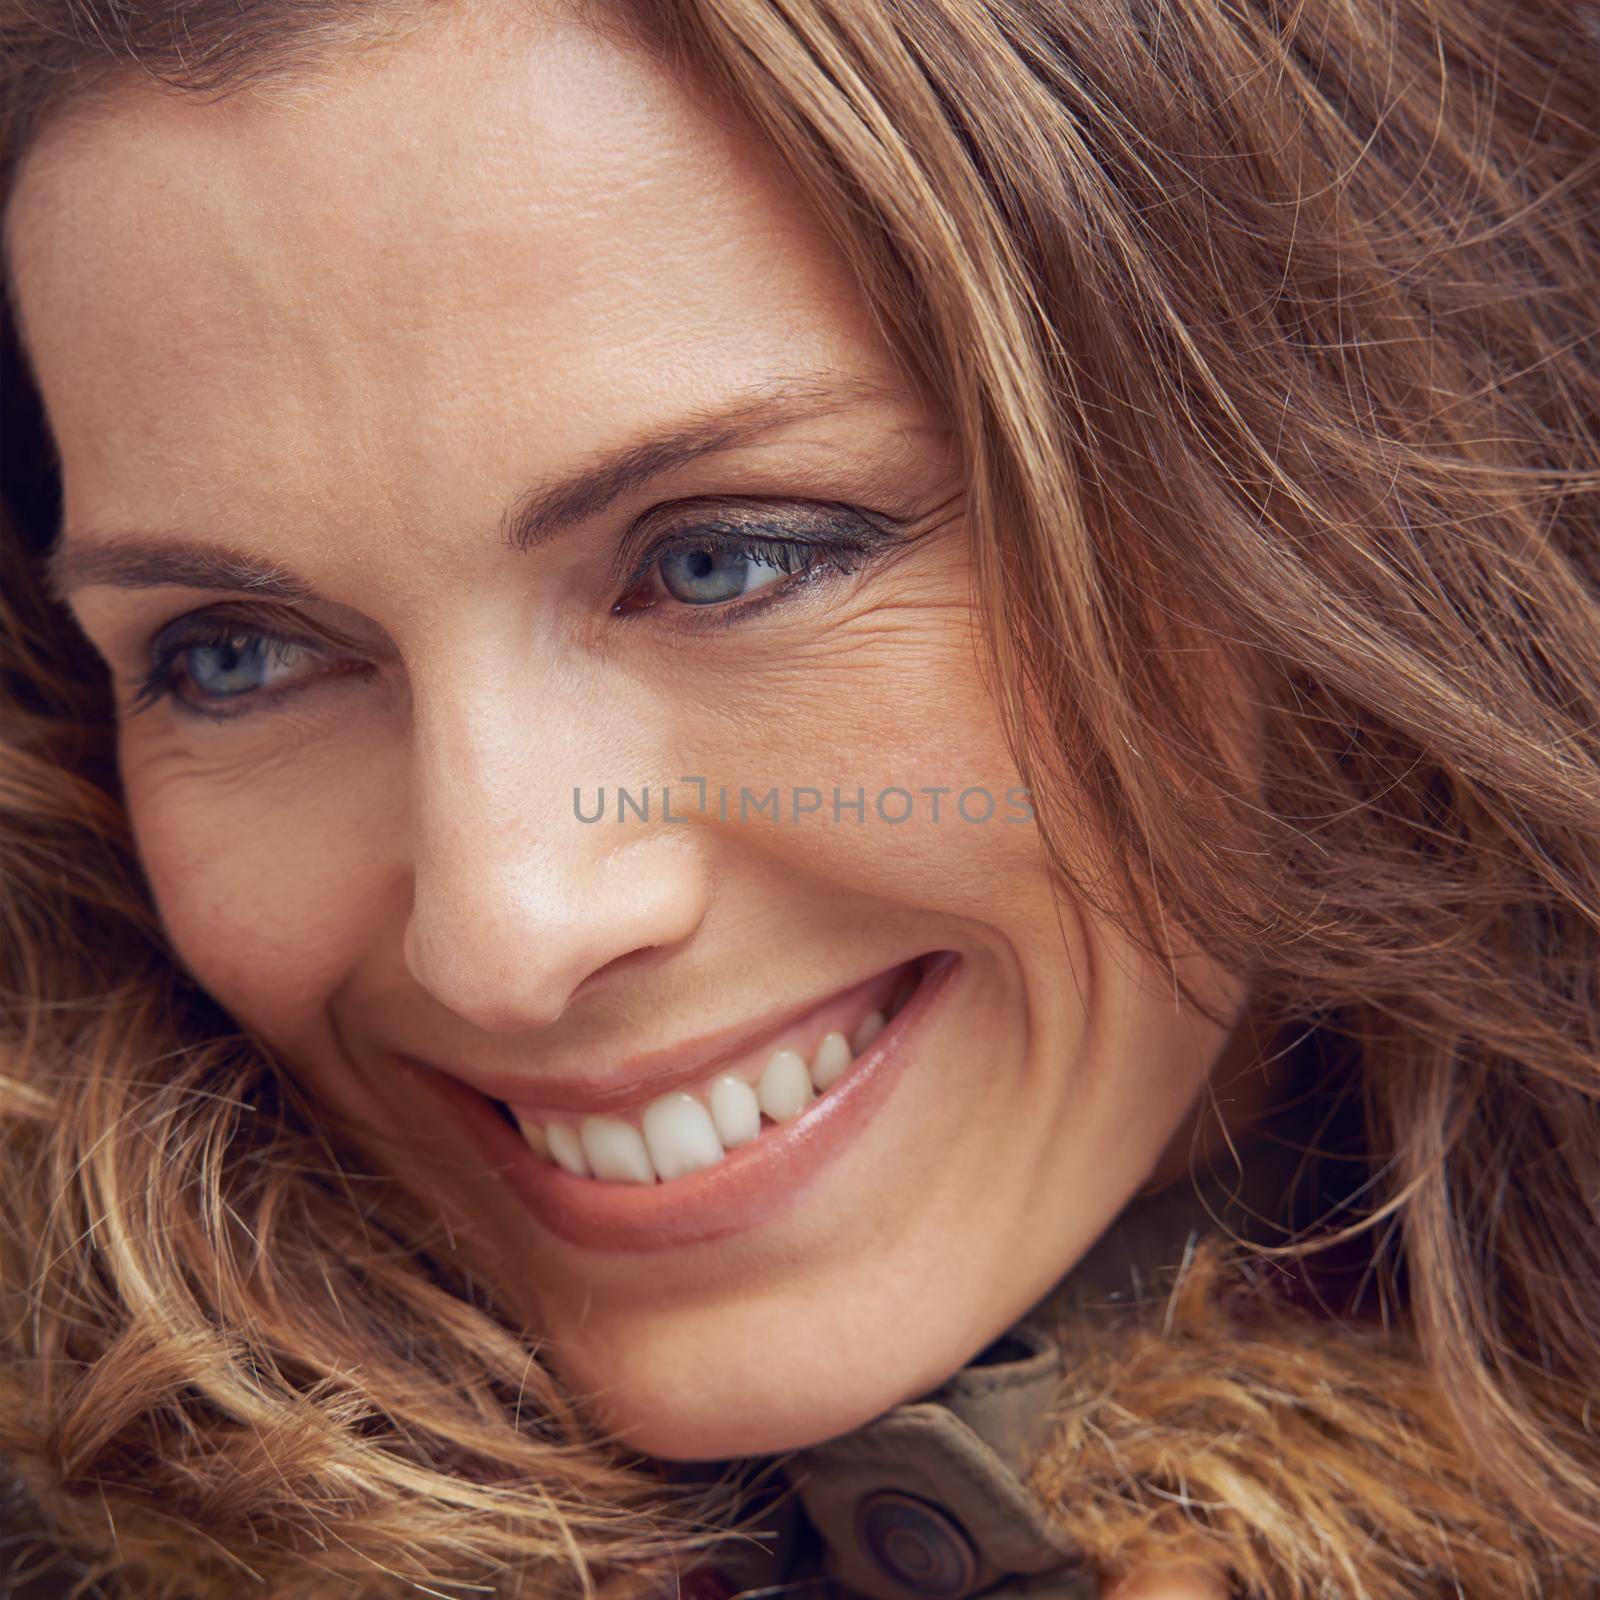 Closeup of a beautiful smiling woman.